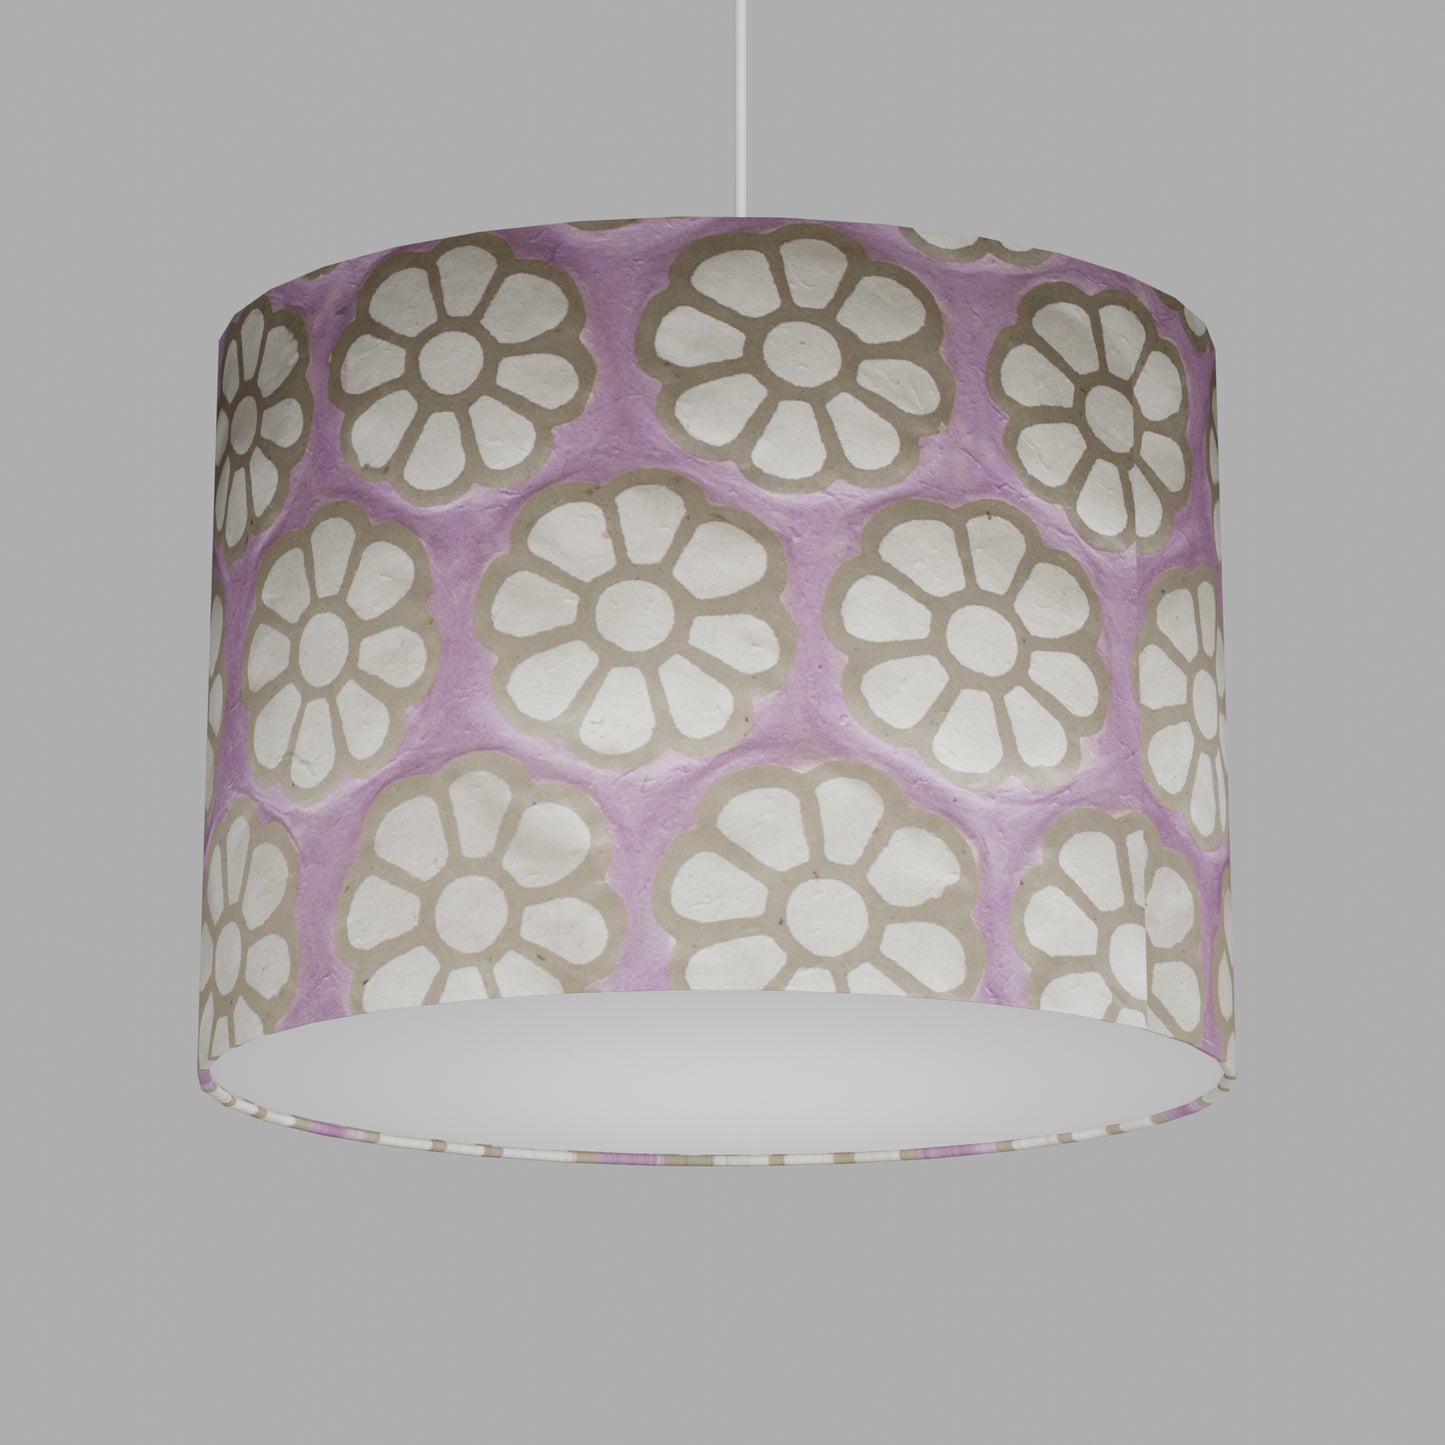 Oval Lamp Shade - P21 - Batik Big Flower on Lilac, 40cm(w) x 30cm(h) x 30cm(d)